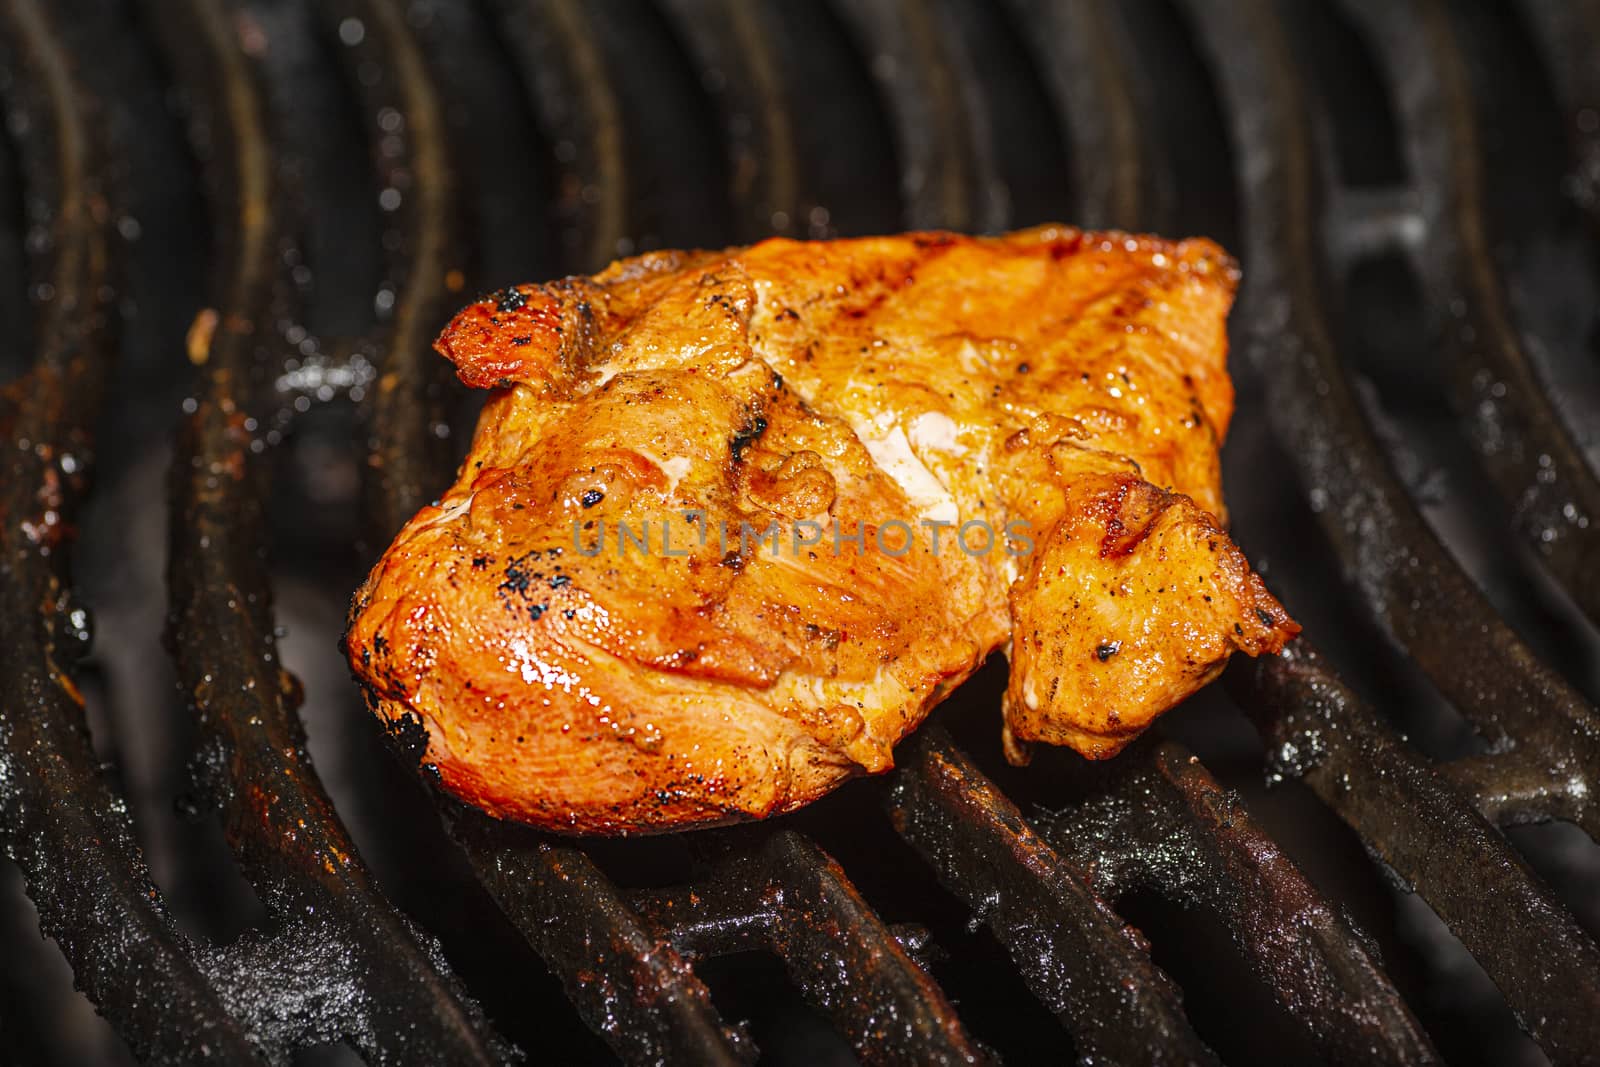 Chicken breast on grill by mypstudio